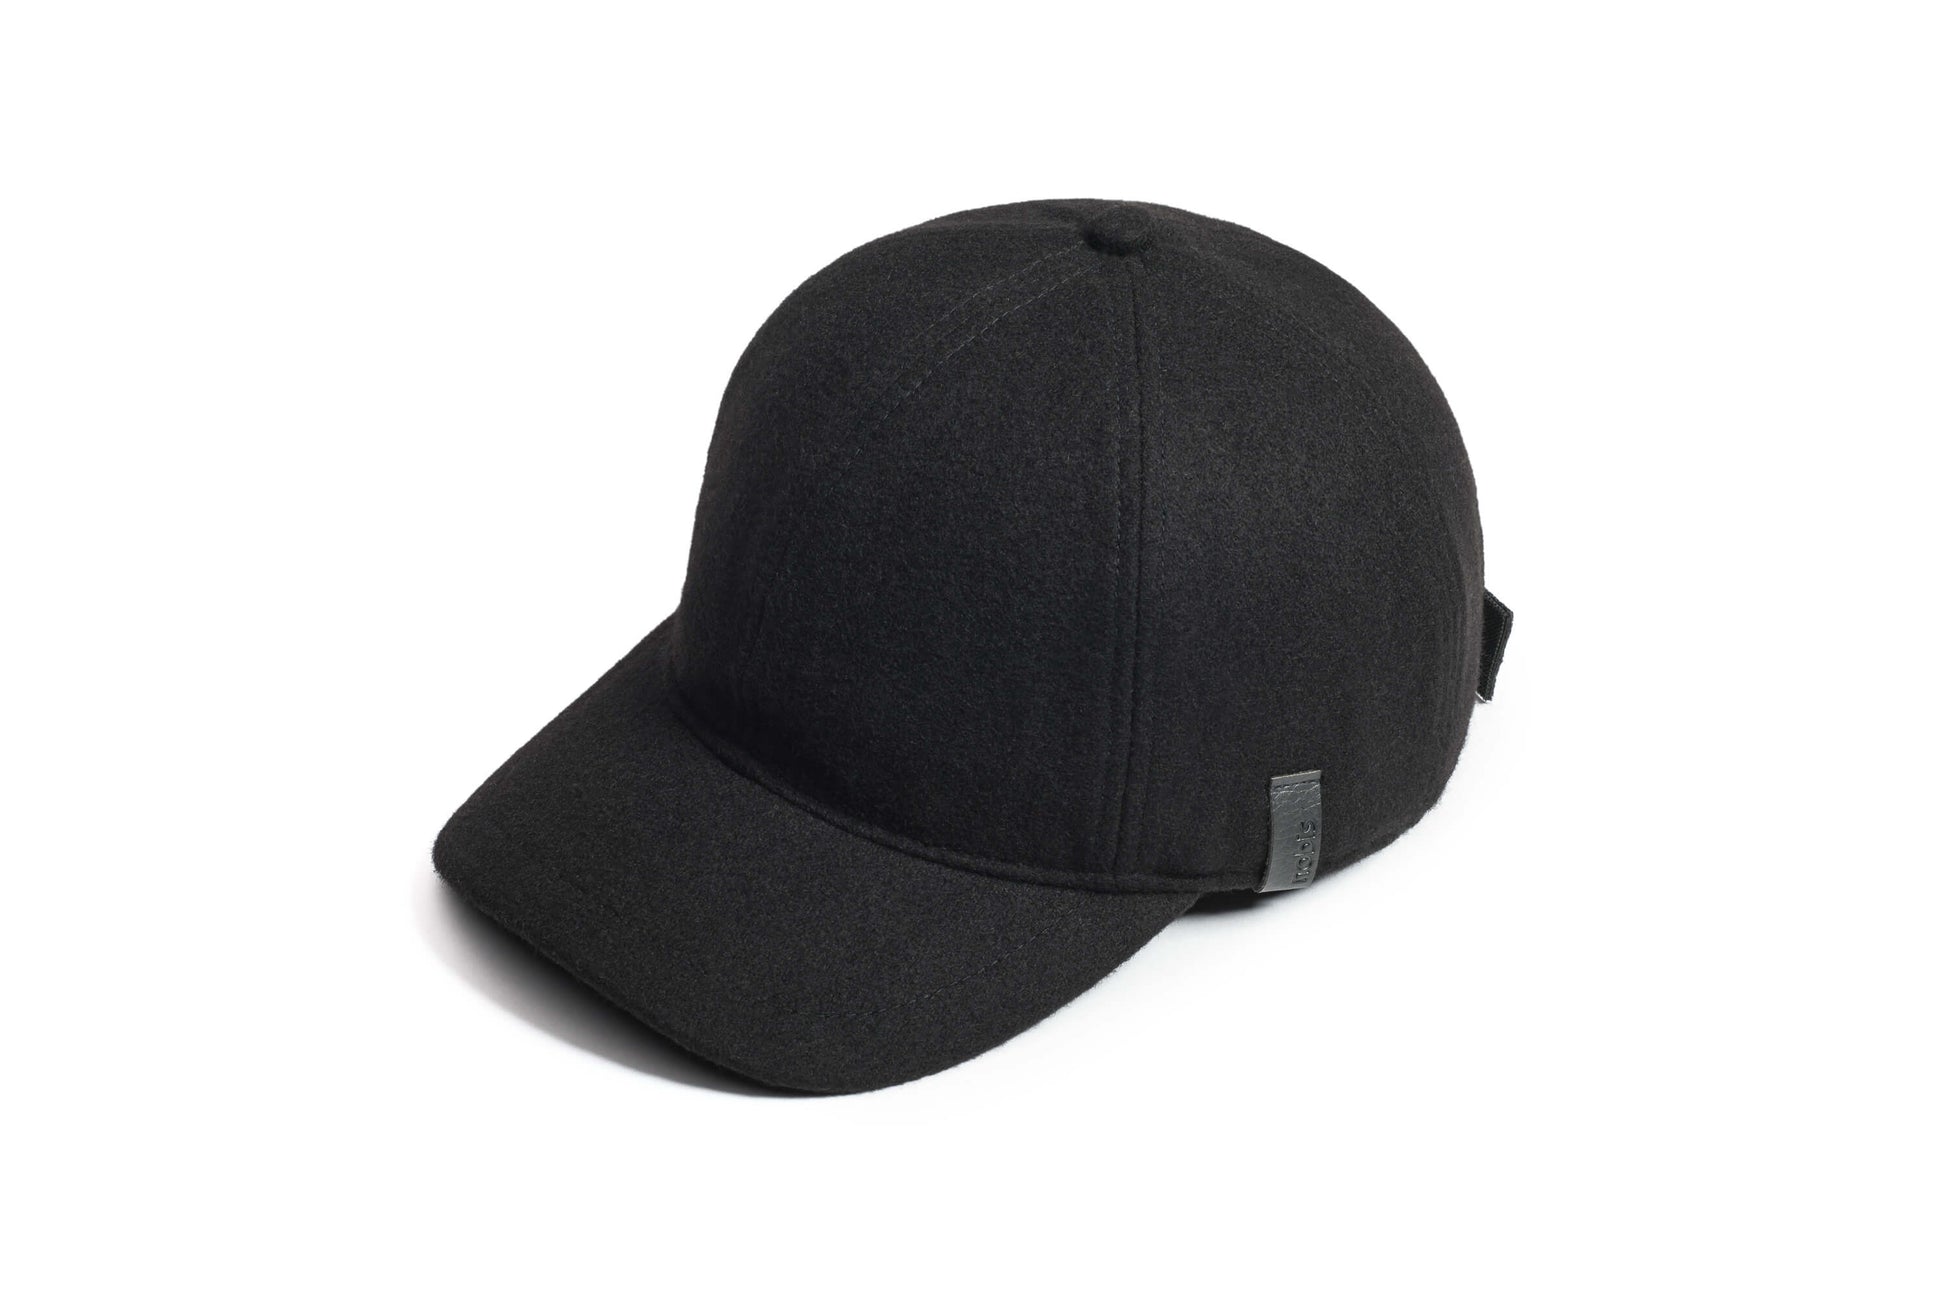 Bronte Unisex Field Cap with low structured crown, curved peak brim, and adjustable webbing strap closure, in Black